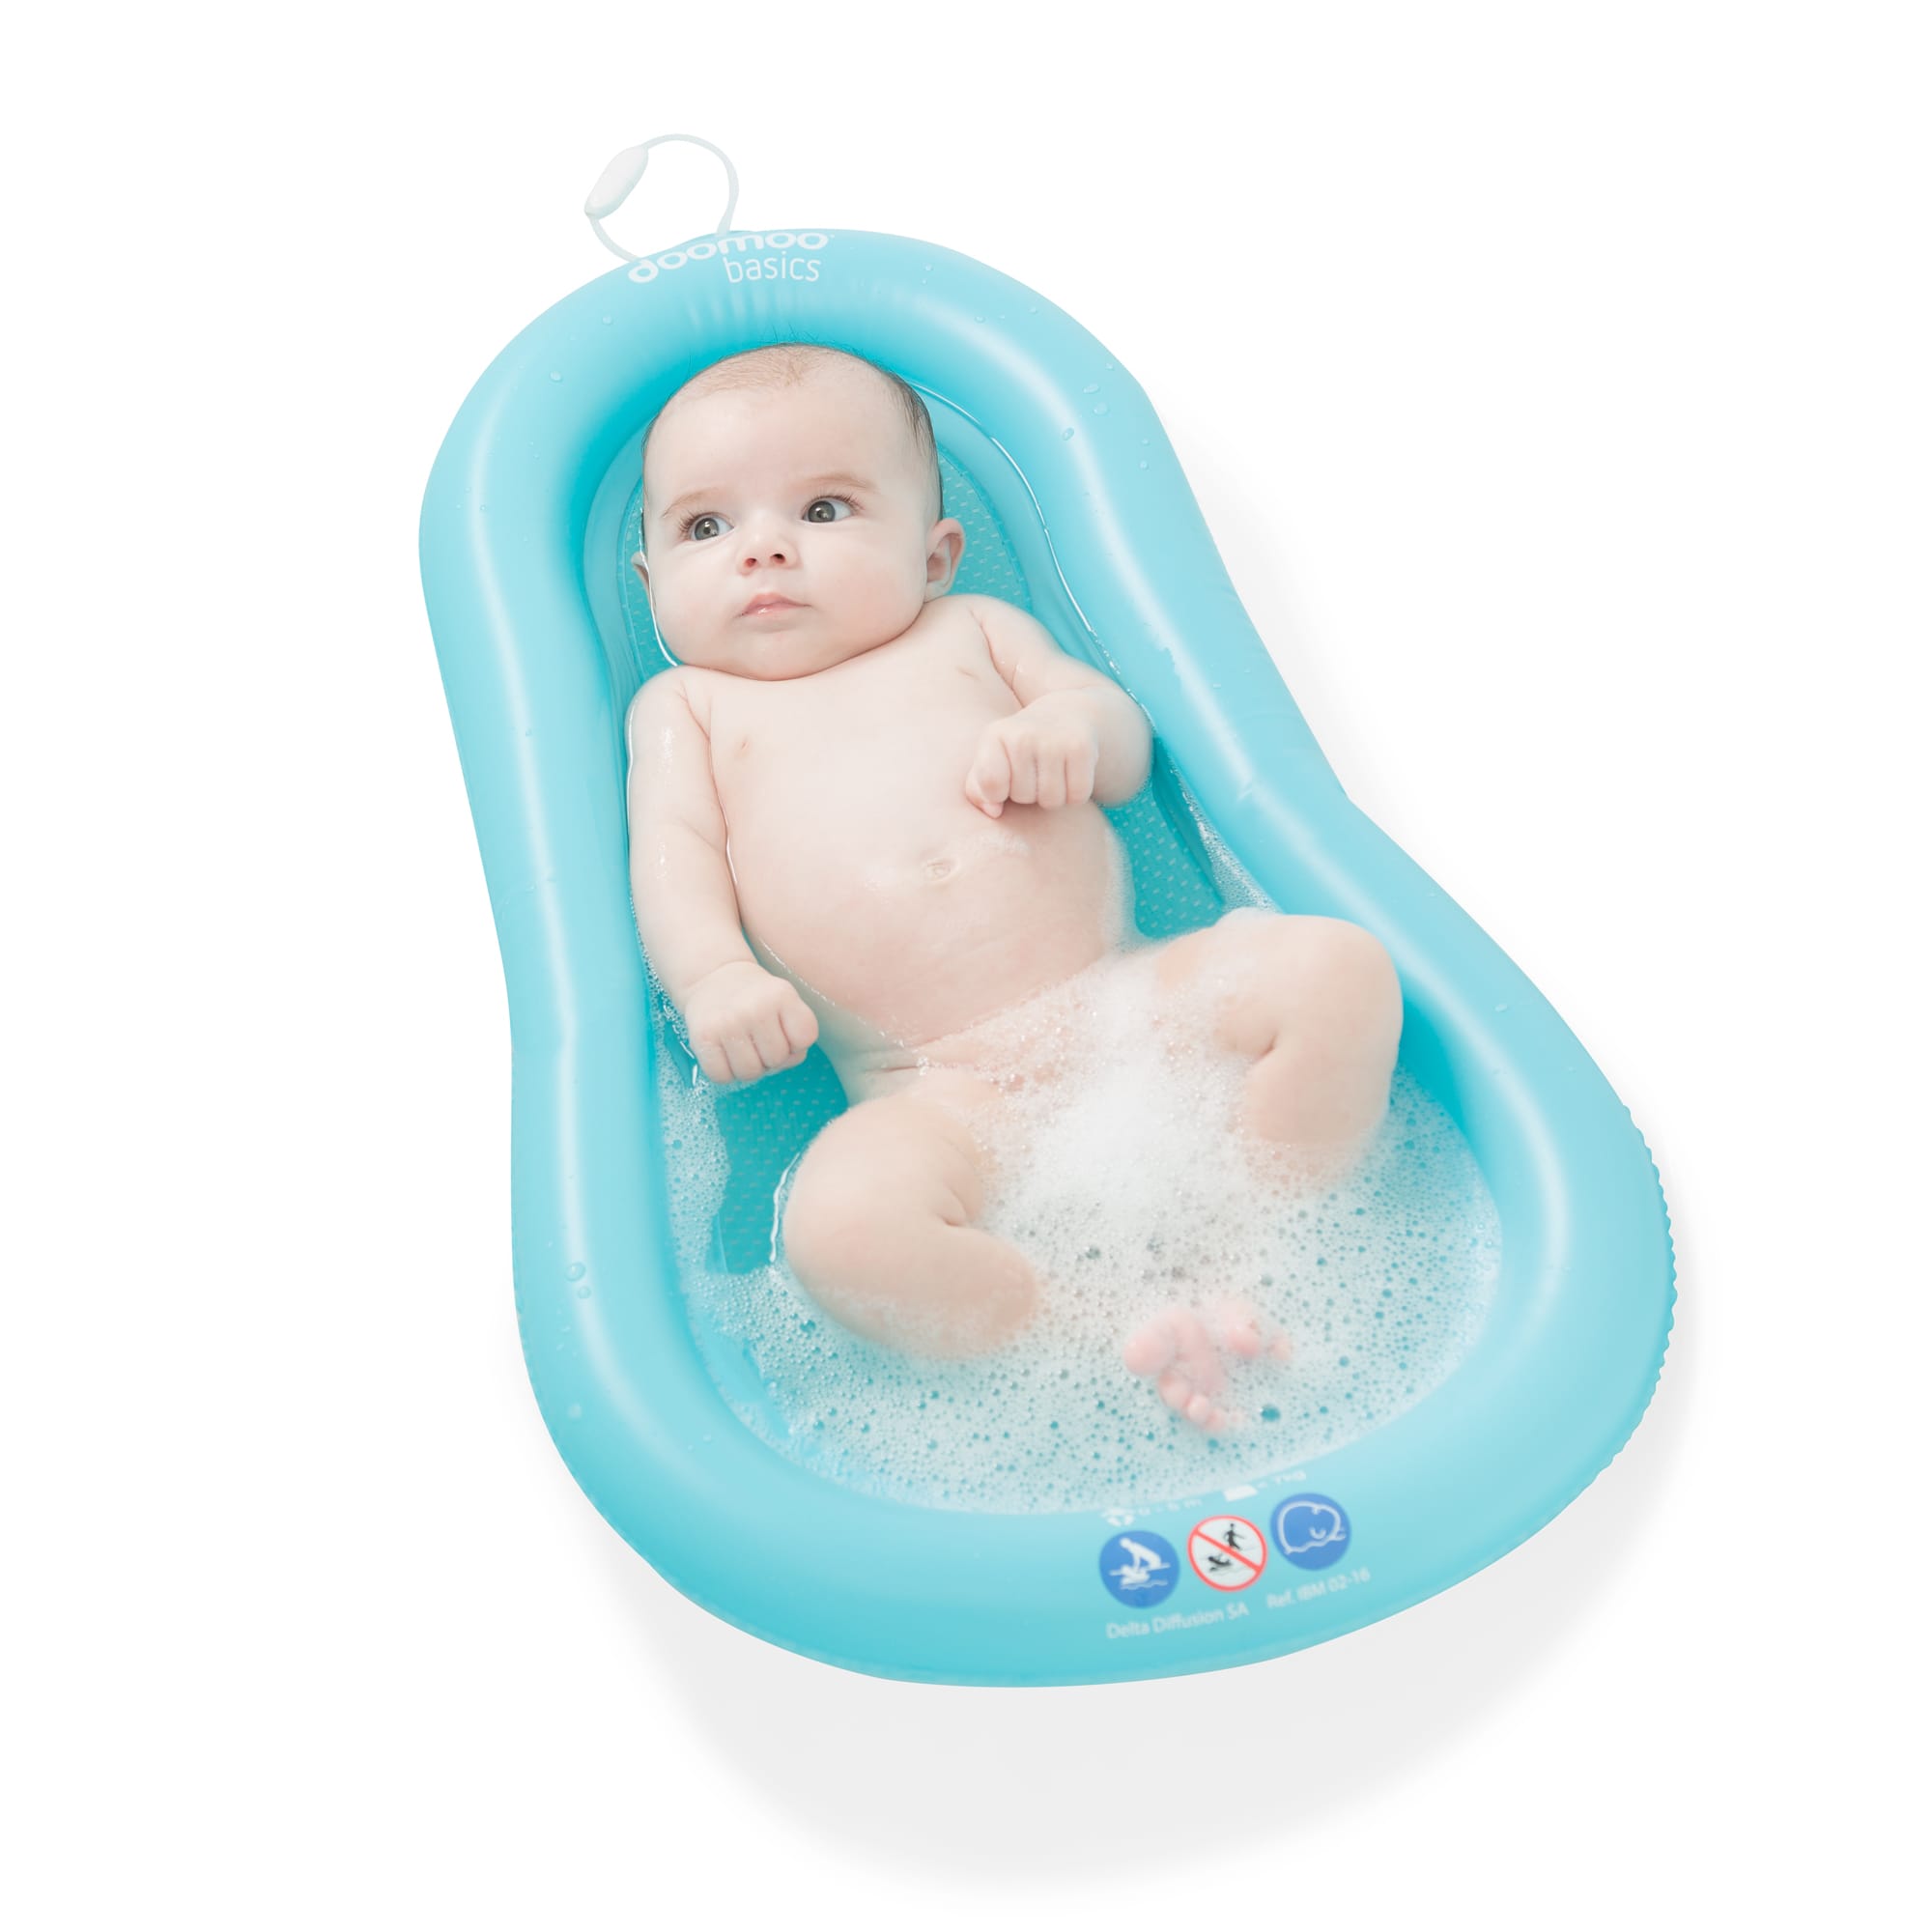 Baby Baths Inflatable Baby Bath Mattress Baby Toolbox Nz